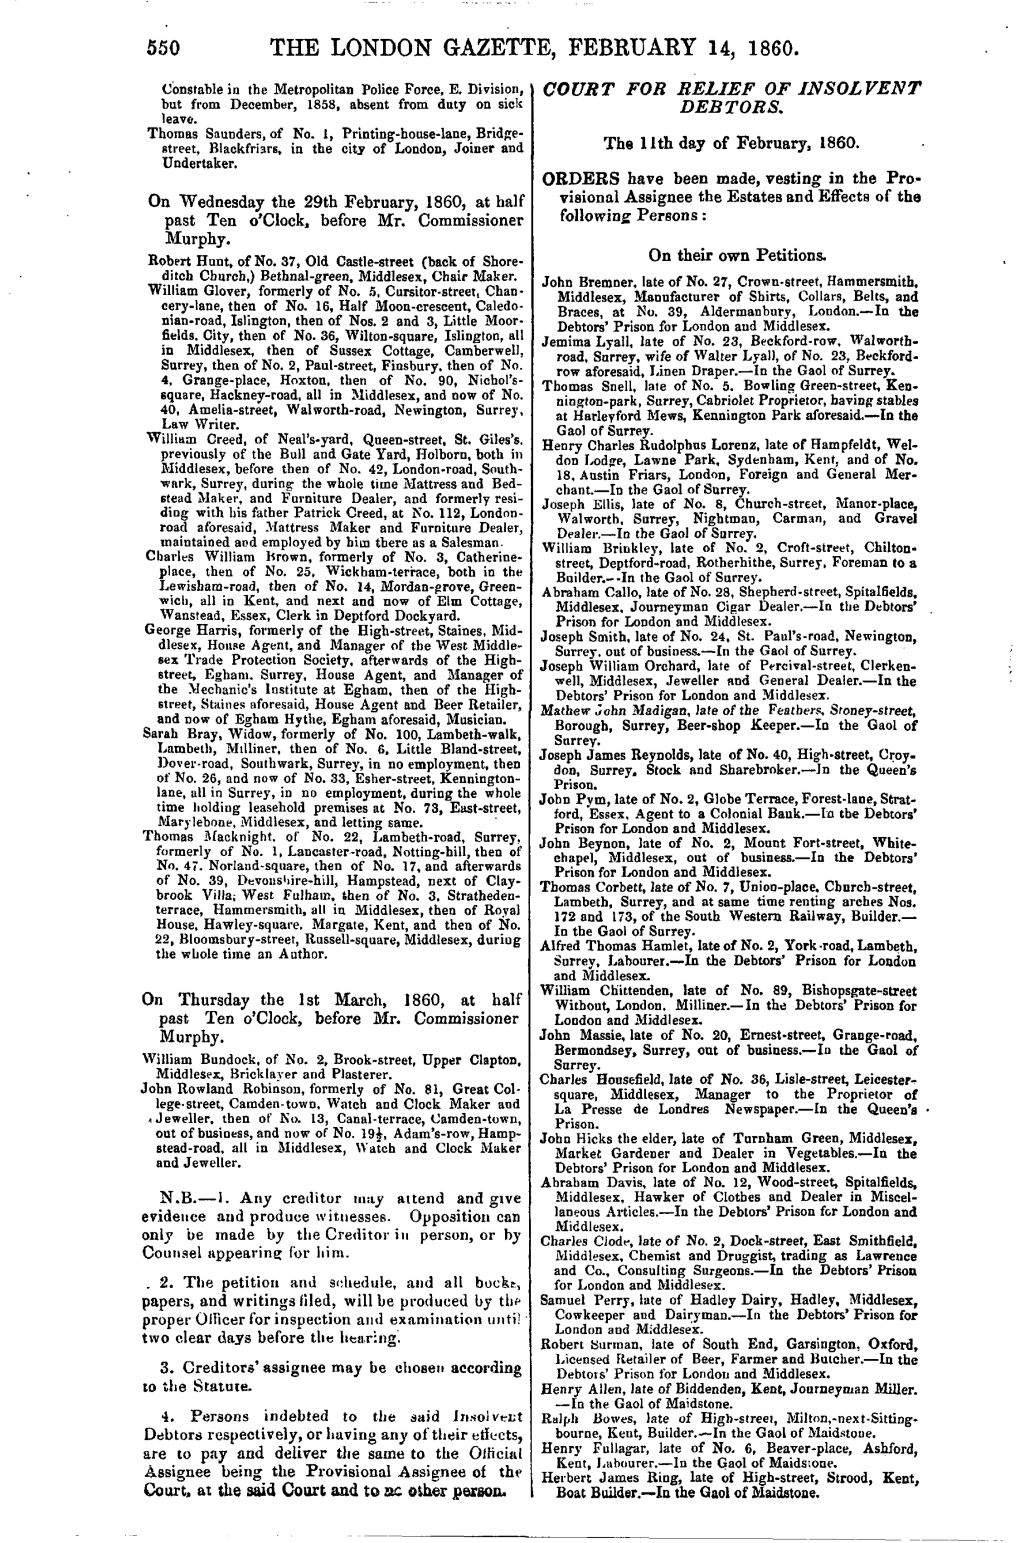 The London Gazette, February 14, 1860